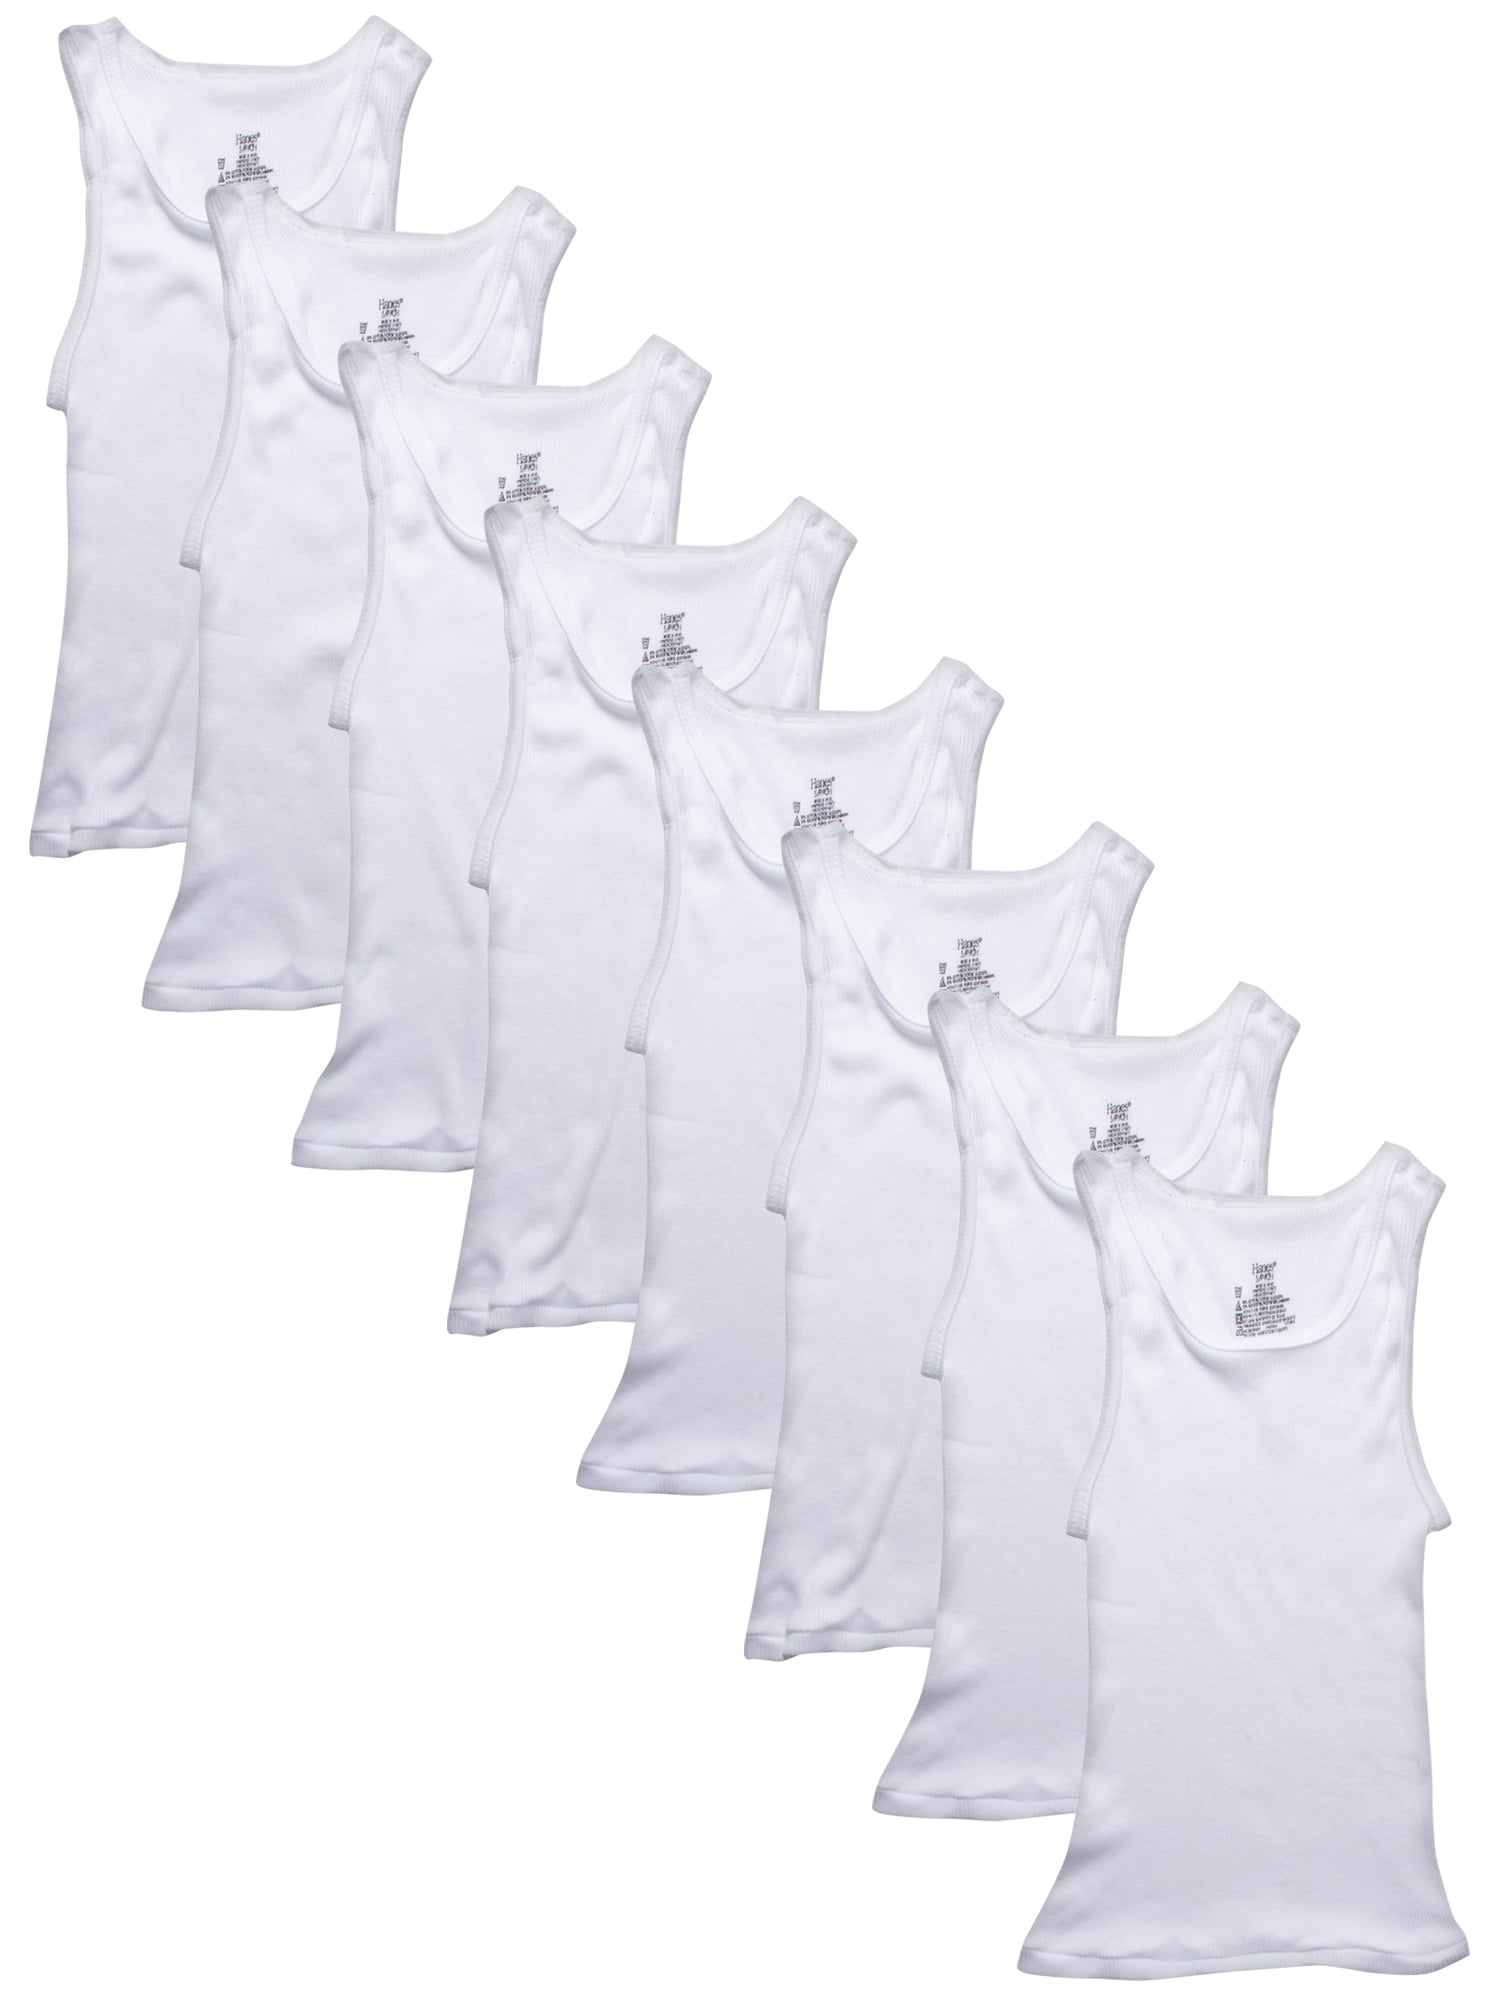 Hanes 192503320201 Boys EcoSmart Crewneck Undershirt White - Small - Pack of 5